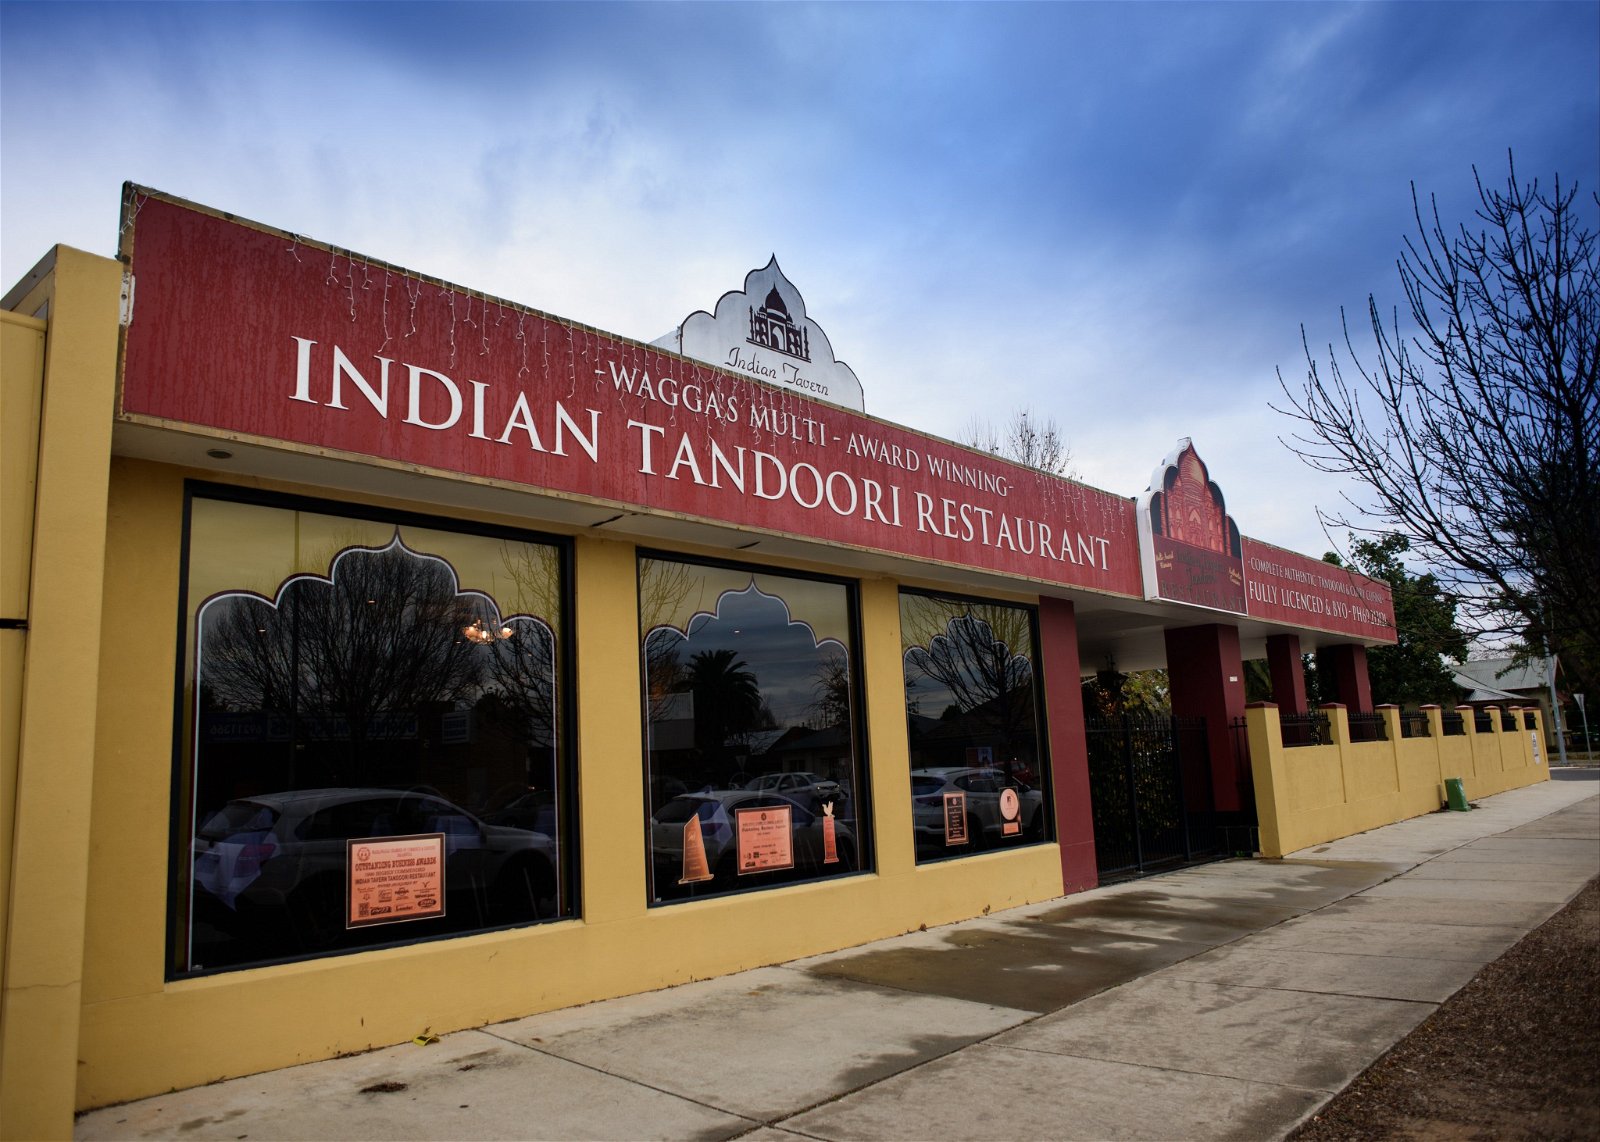 Indian Tavern Tandoori - Pubs Sydney